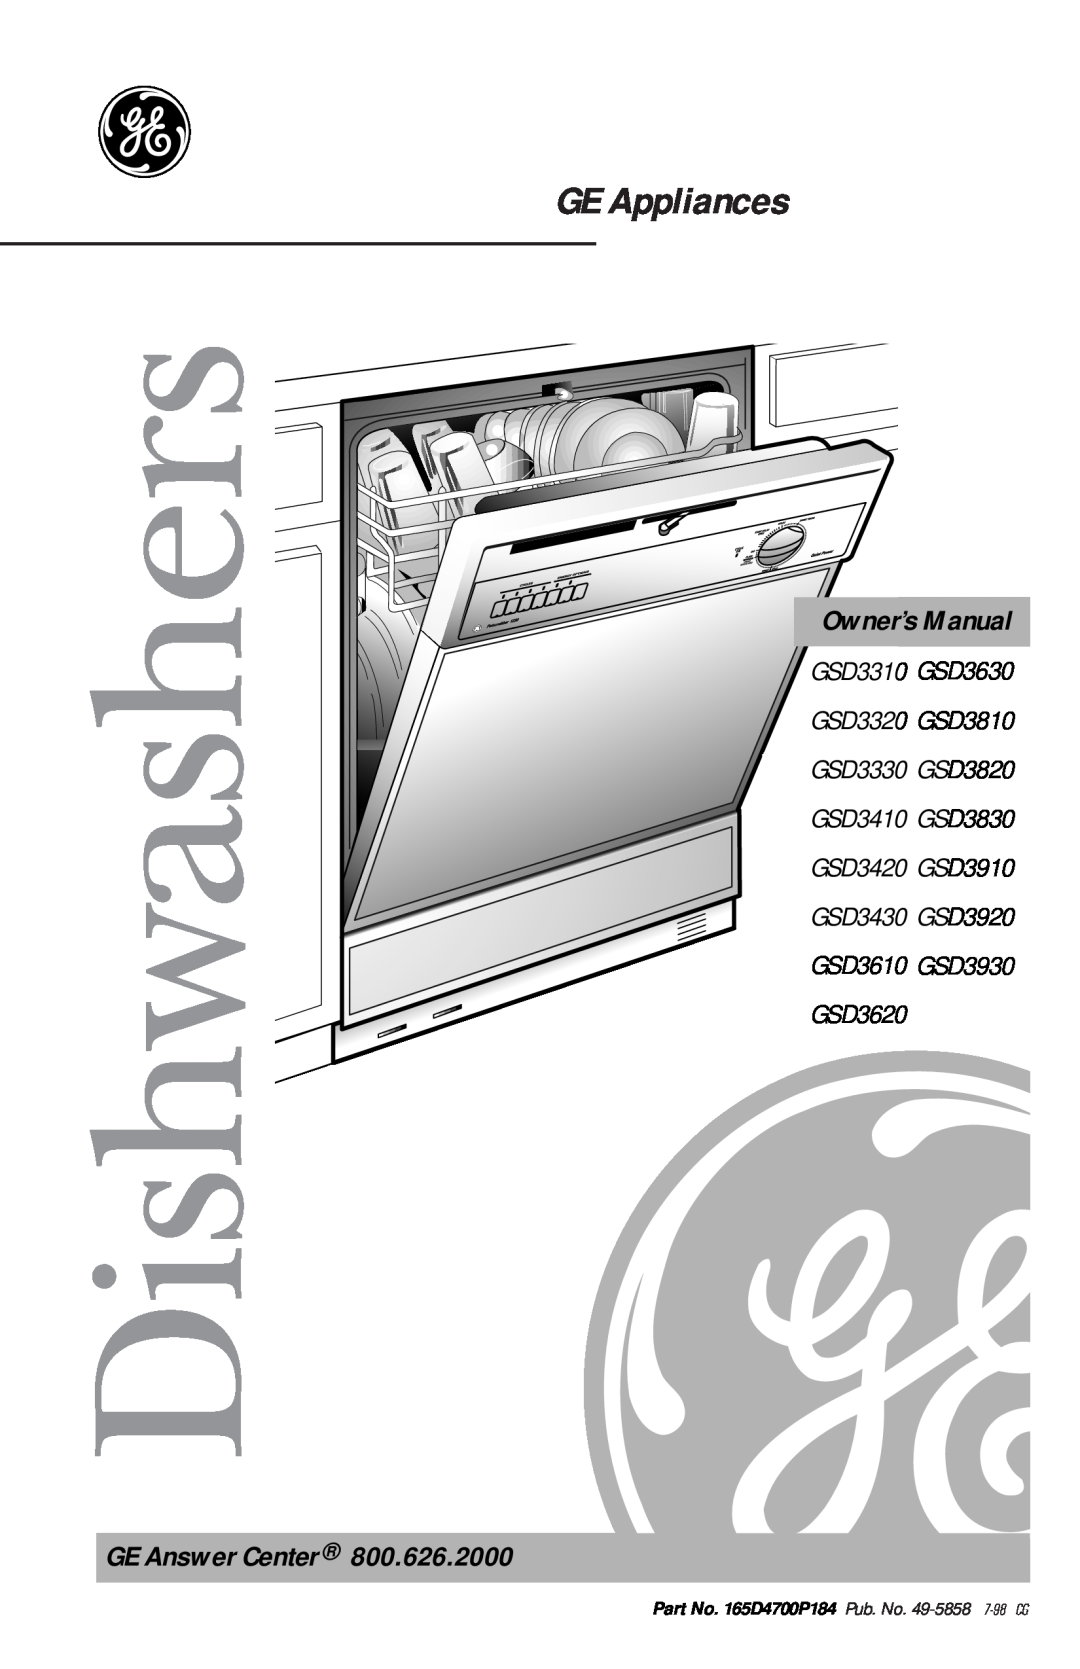 GE GSD3830 owner manual GE Appliances, GE Answer Center, Dishwashers, Part No. 165D4700P184 Pub. No. 49-5858 7-98 CG 